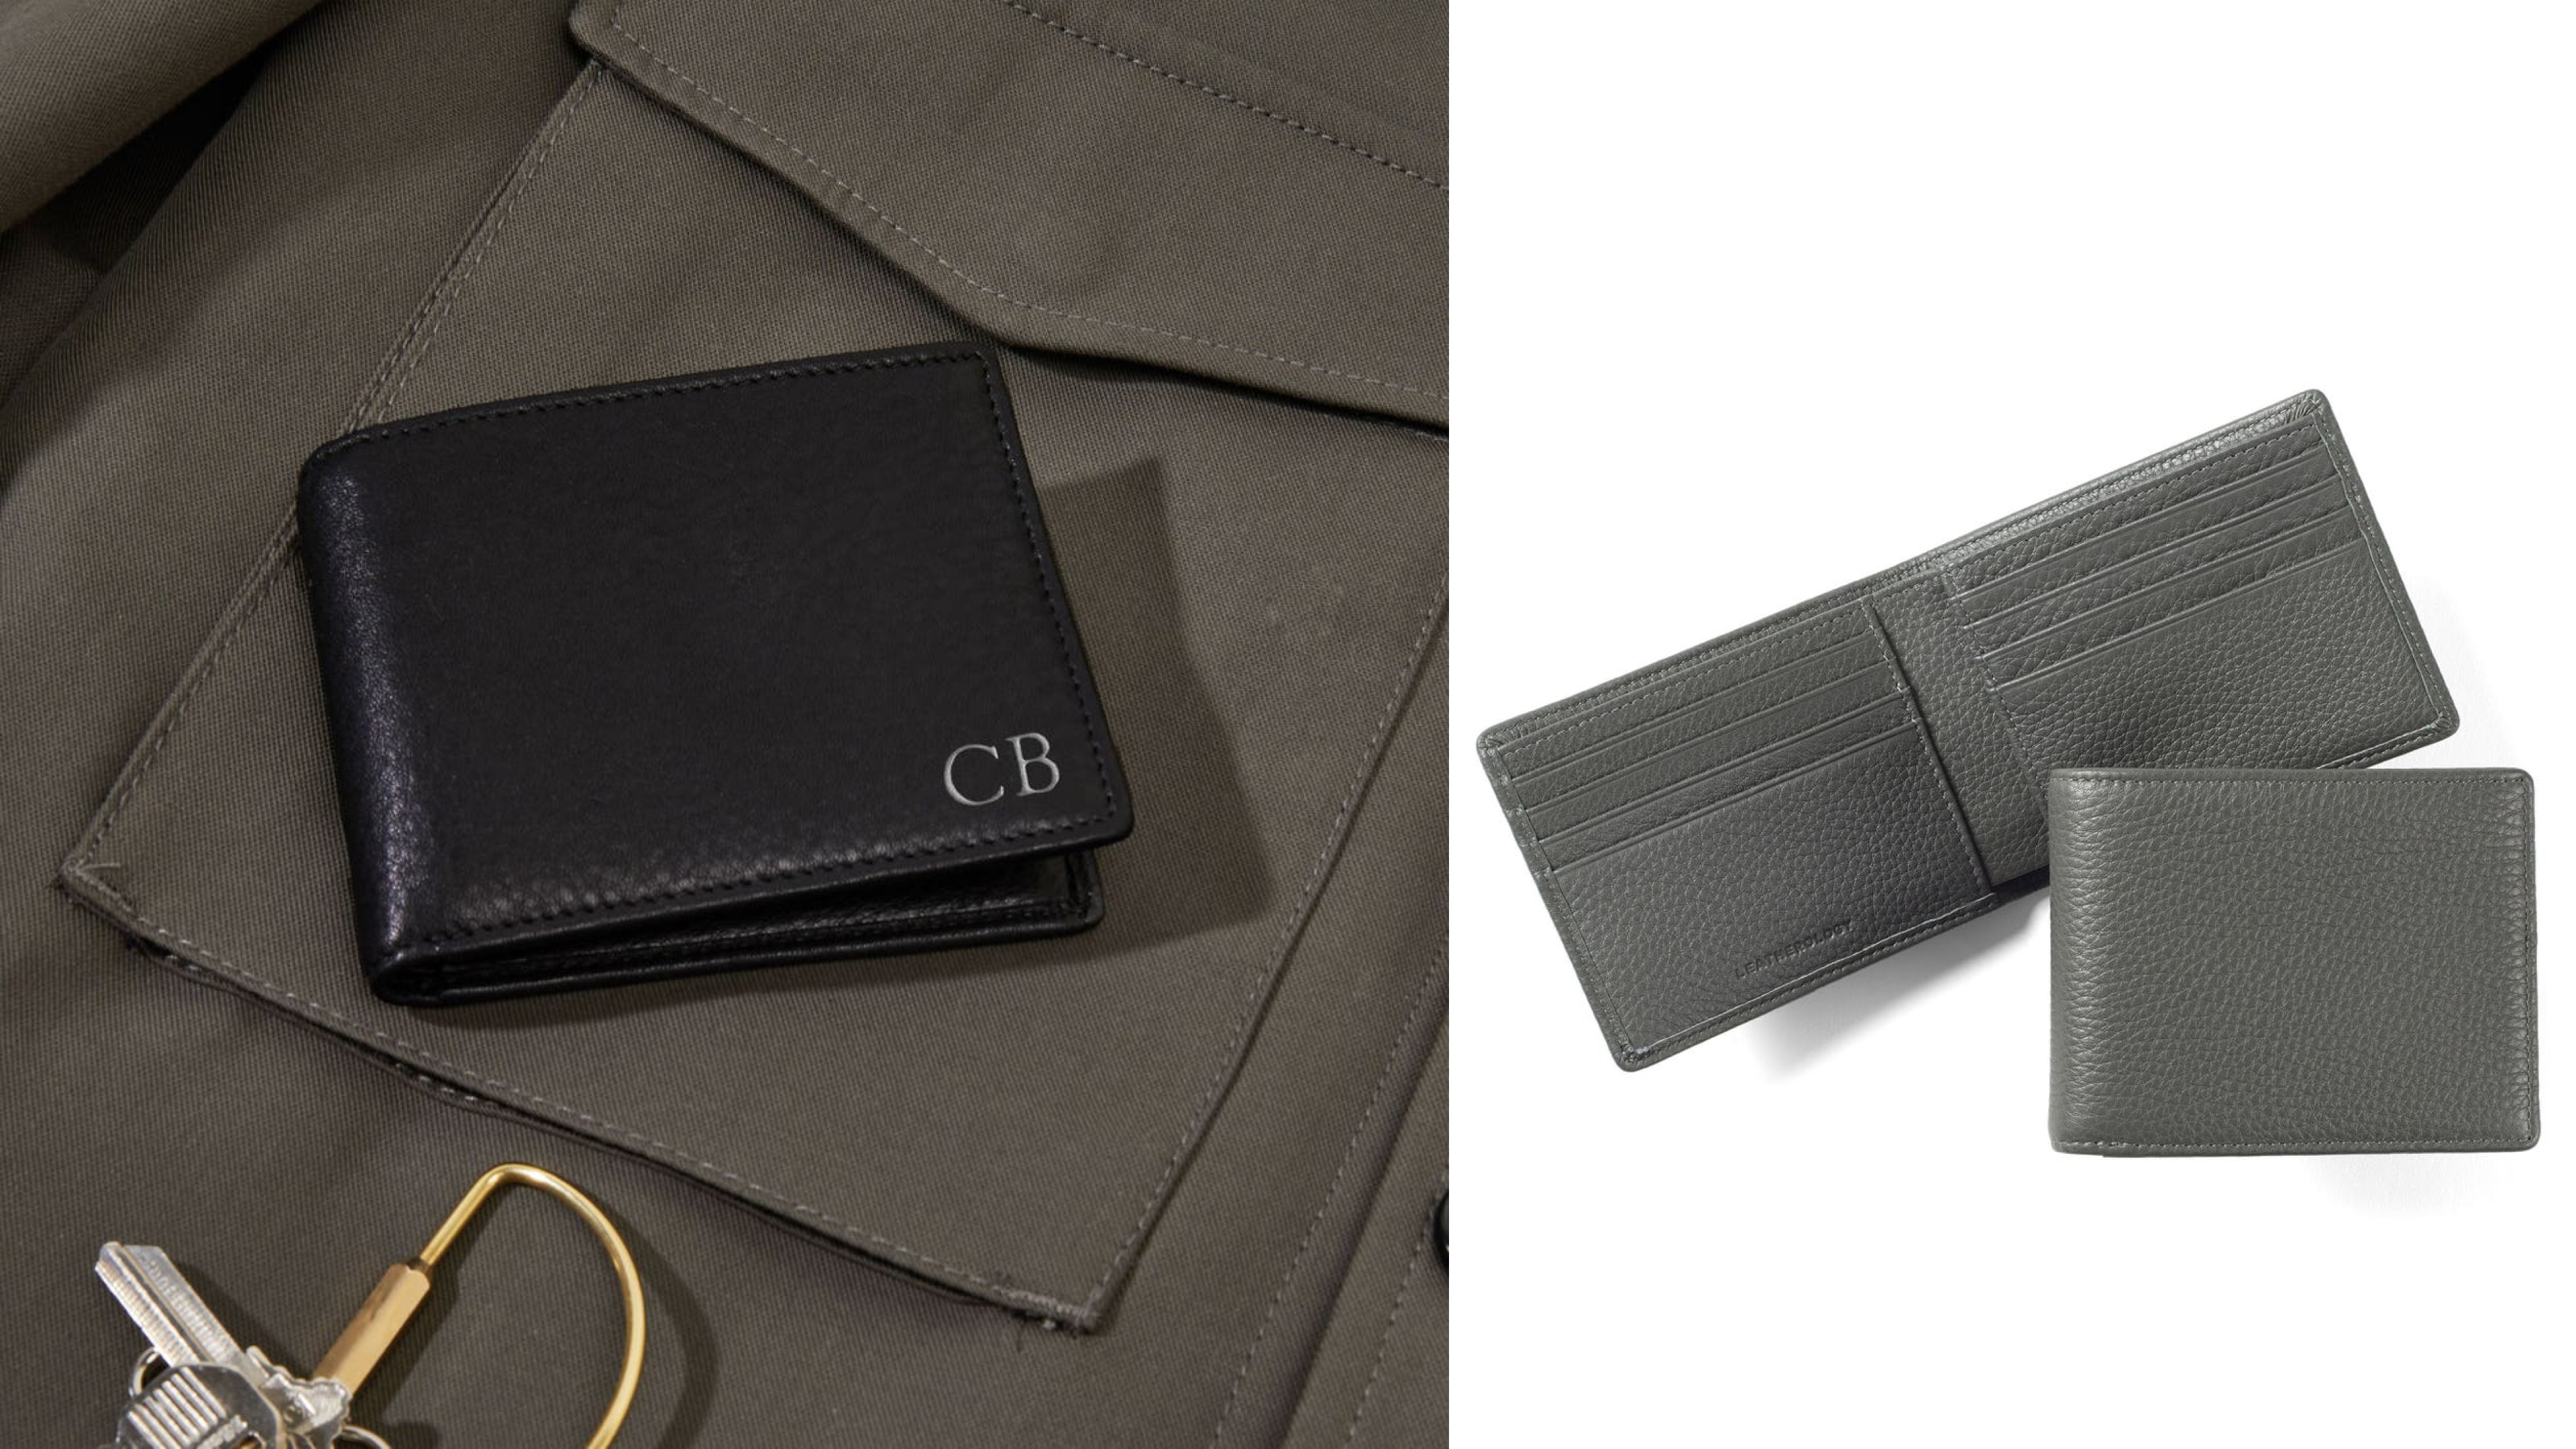 slim leather men's wallet in various colors